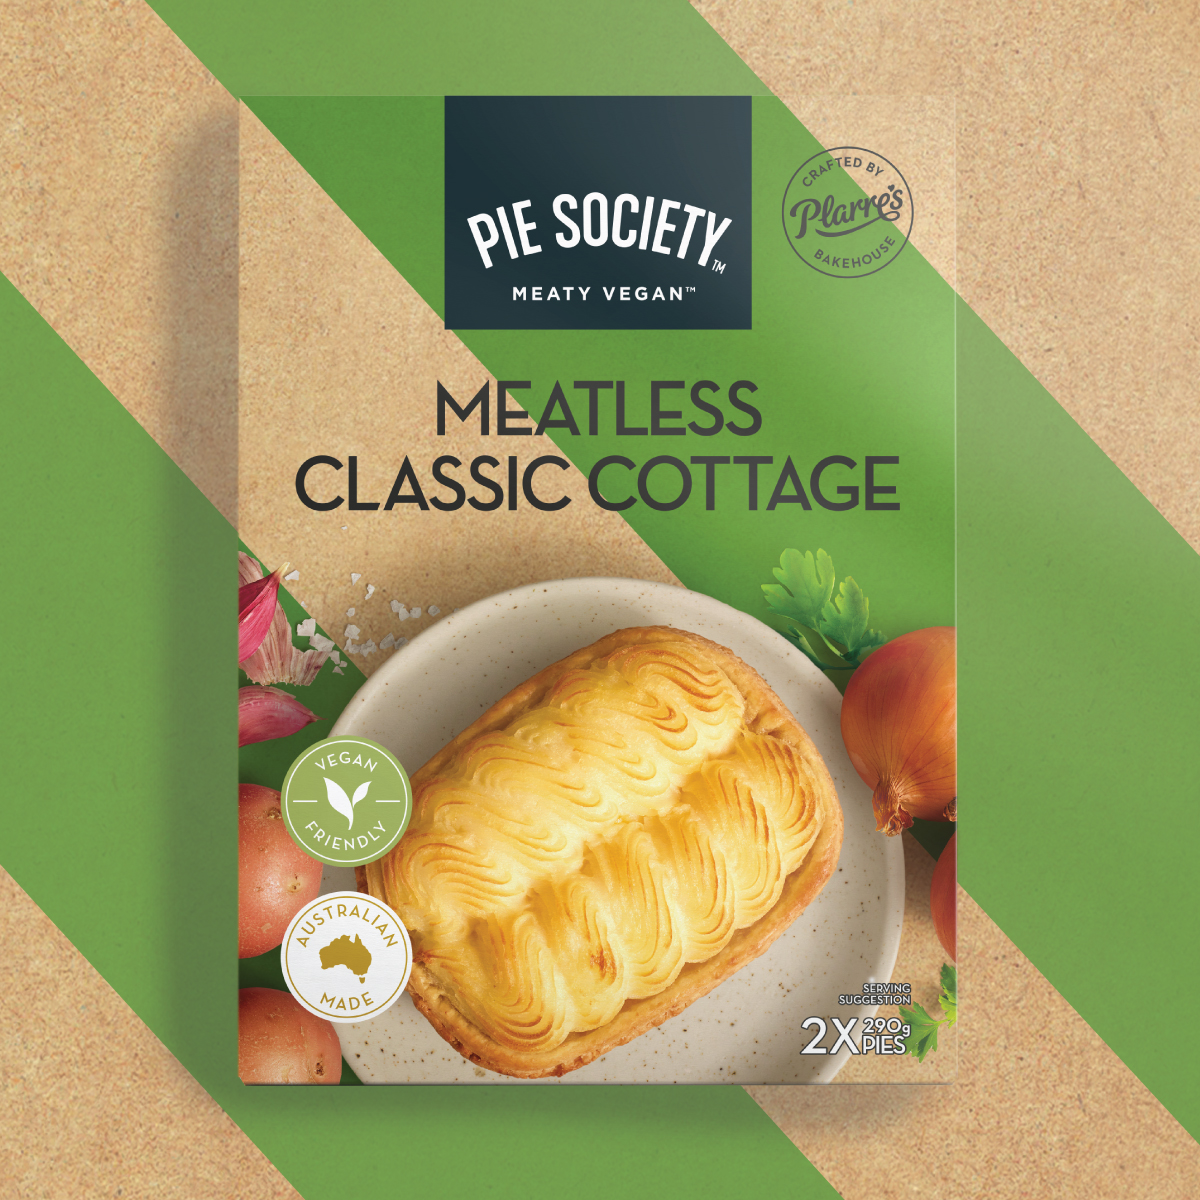 Ferguson Plarre’s Pie Society - Meatless Cottage Pie packaging design